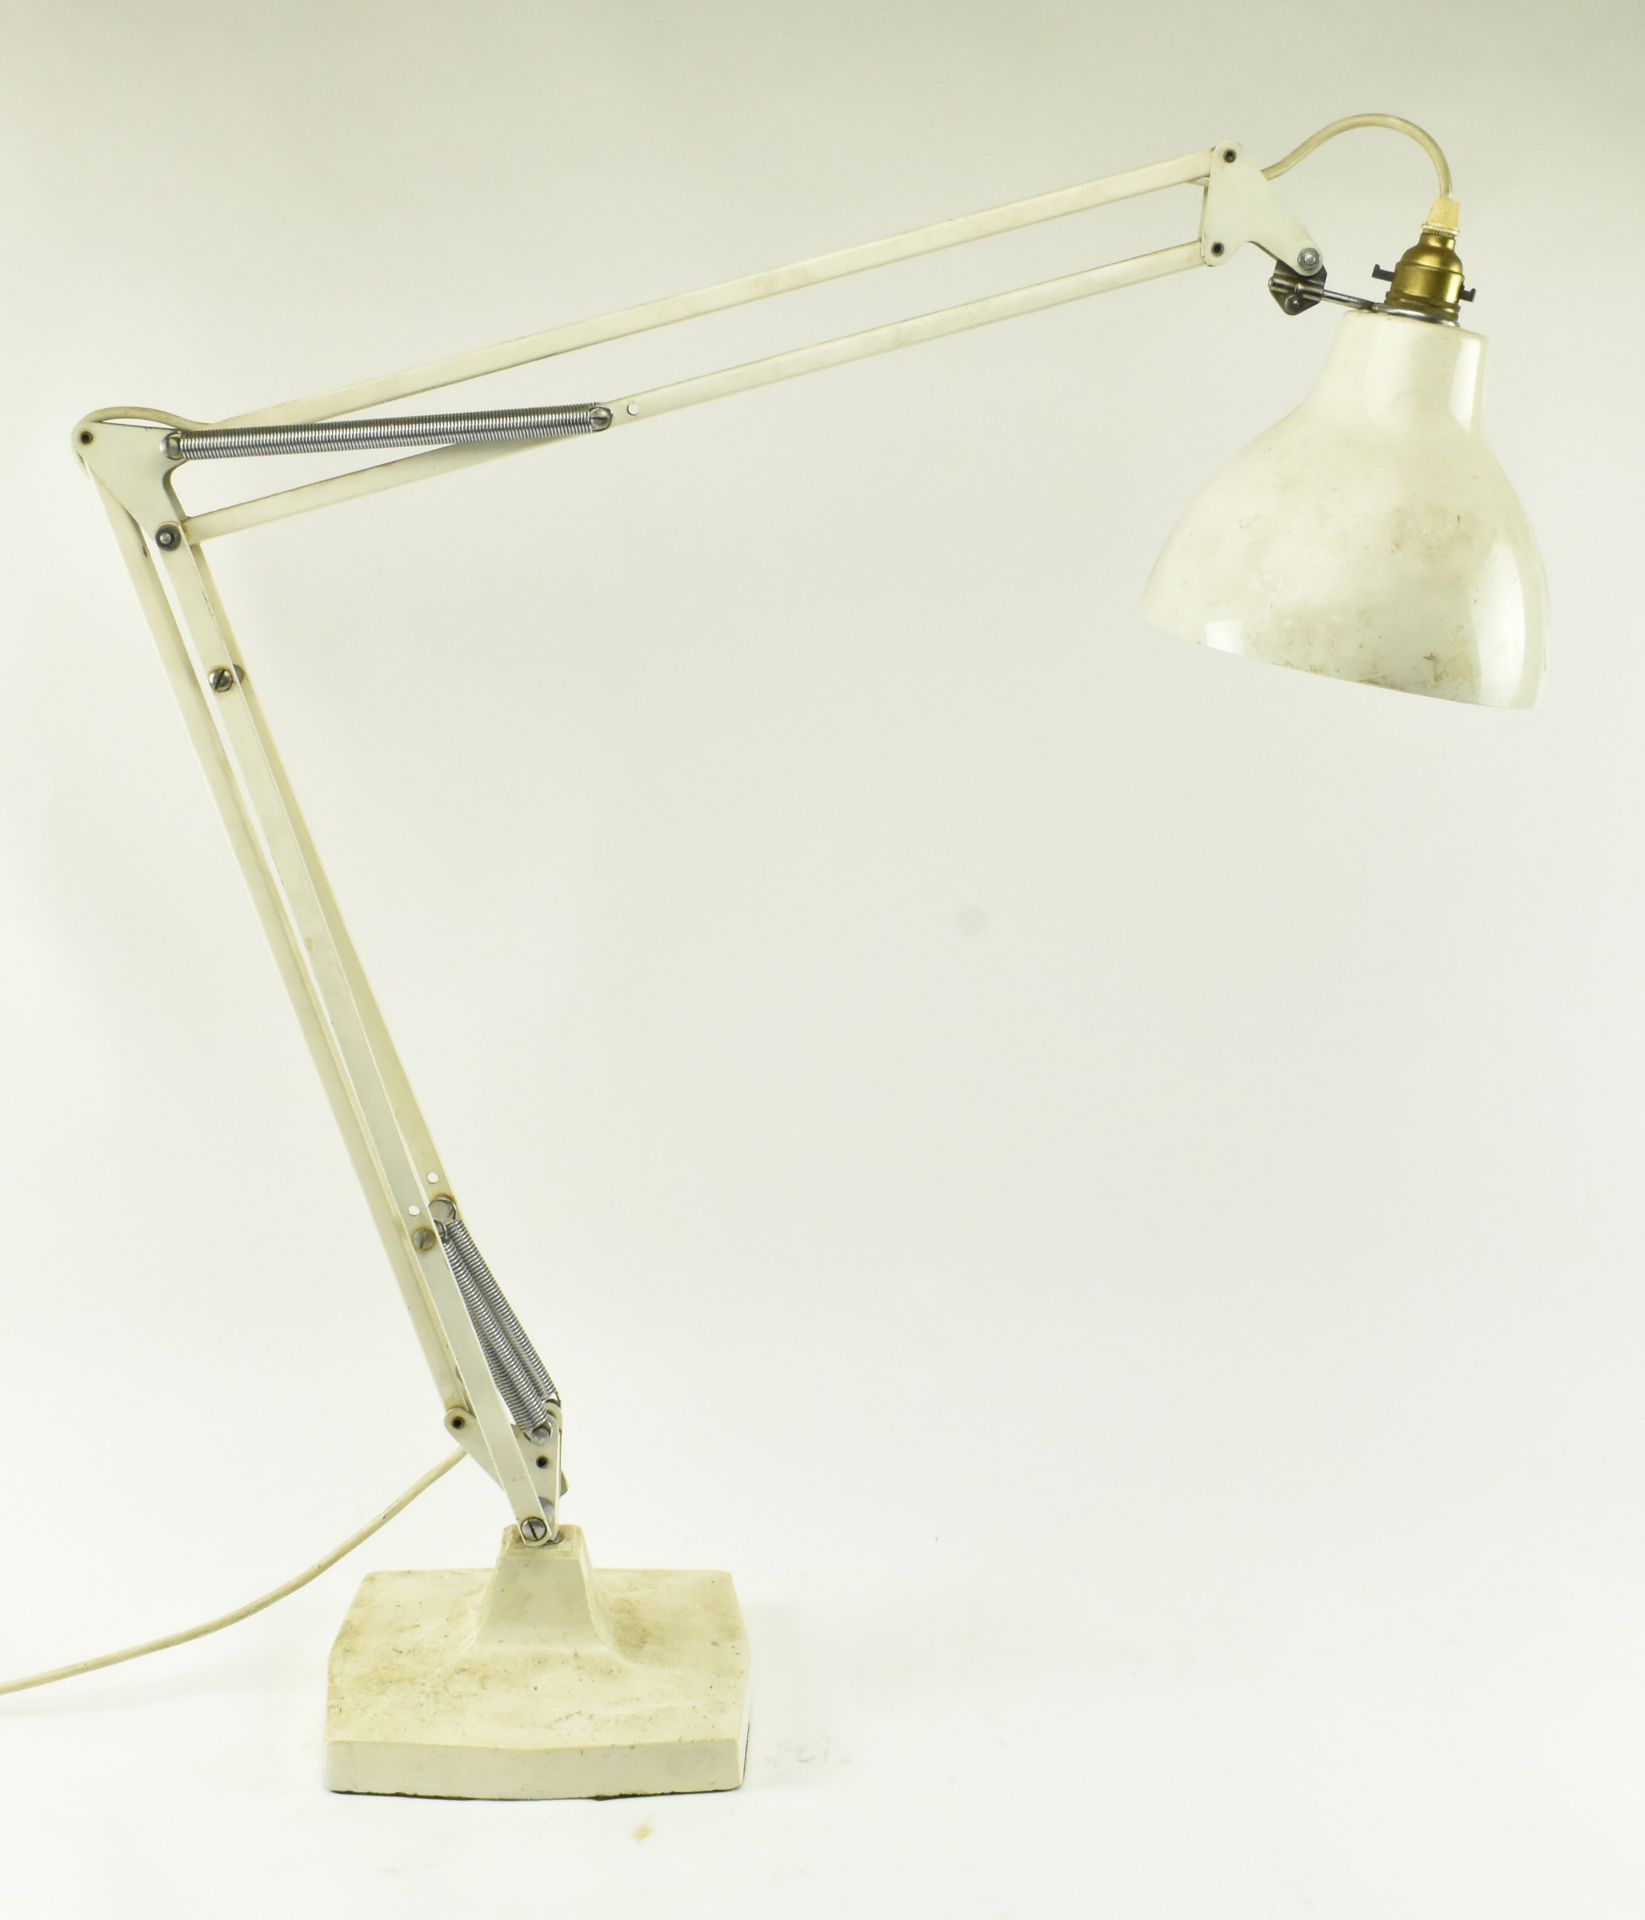 HERBERT TERRY & SONS - ANGLEPOISE 1208 PROTOTYPE DESK LAMP